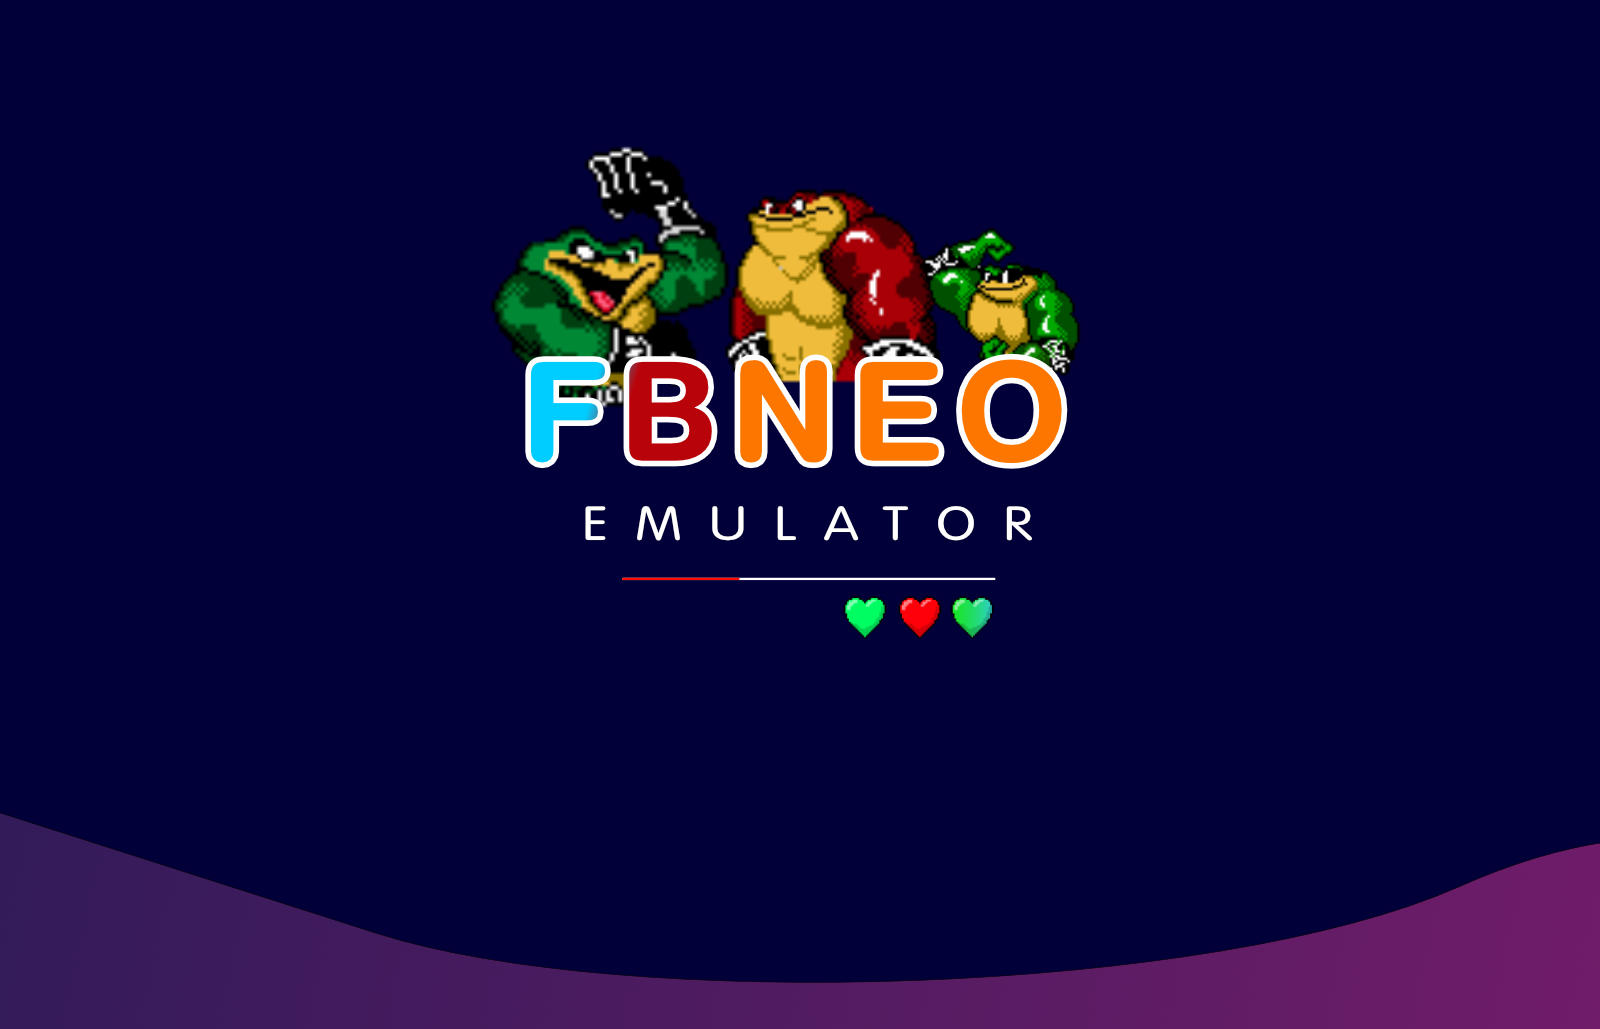 FB Neo - emulator Nes for PC, Windows